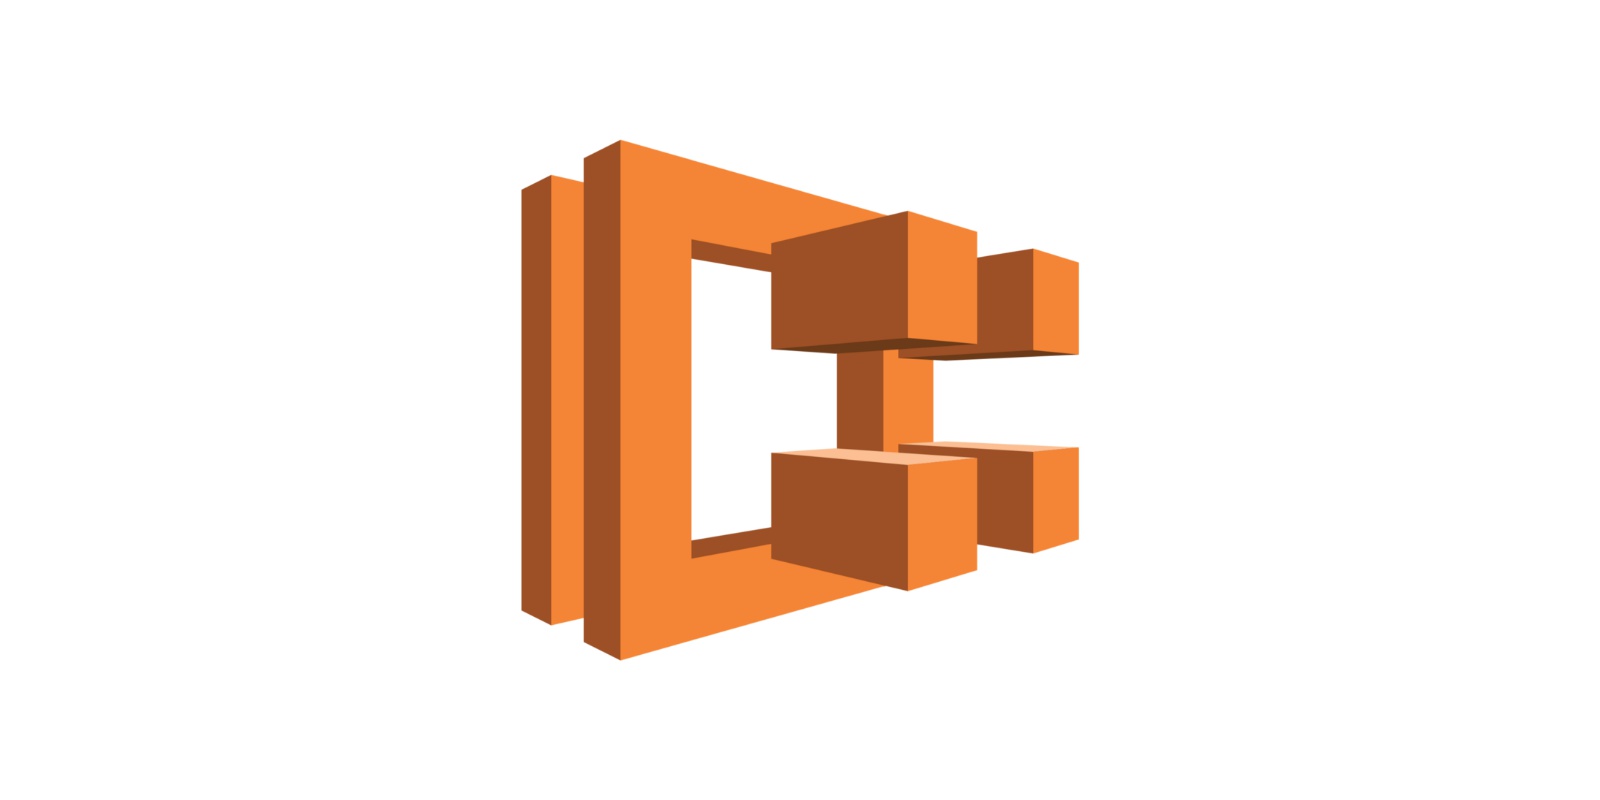 EC2 Container Service(ECS) 사용하기 + AutoScaling